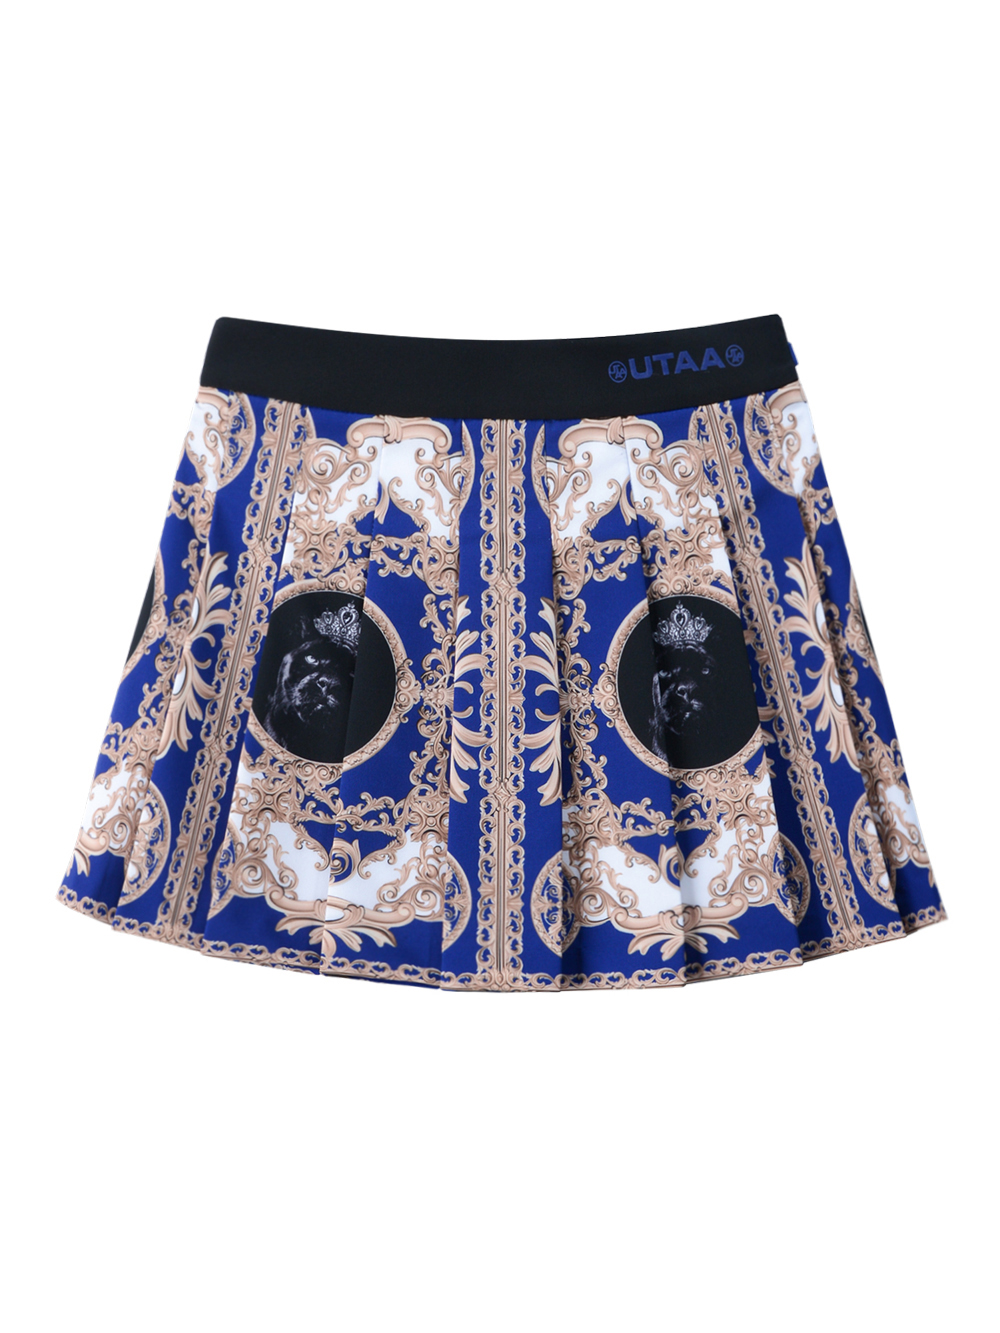 UTAA Panther Buckingham Skirt : Blue (UC3SKF591BL)